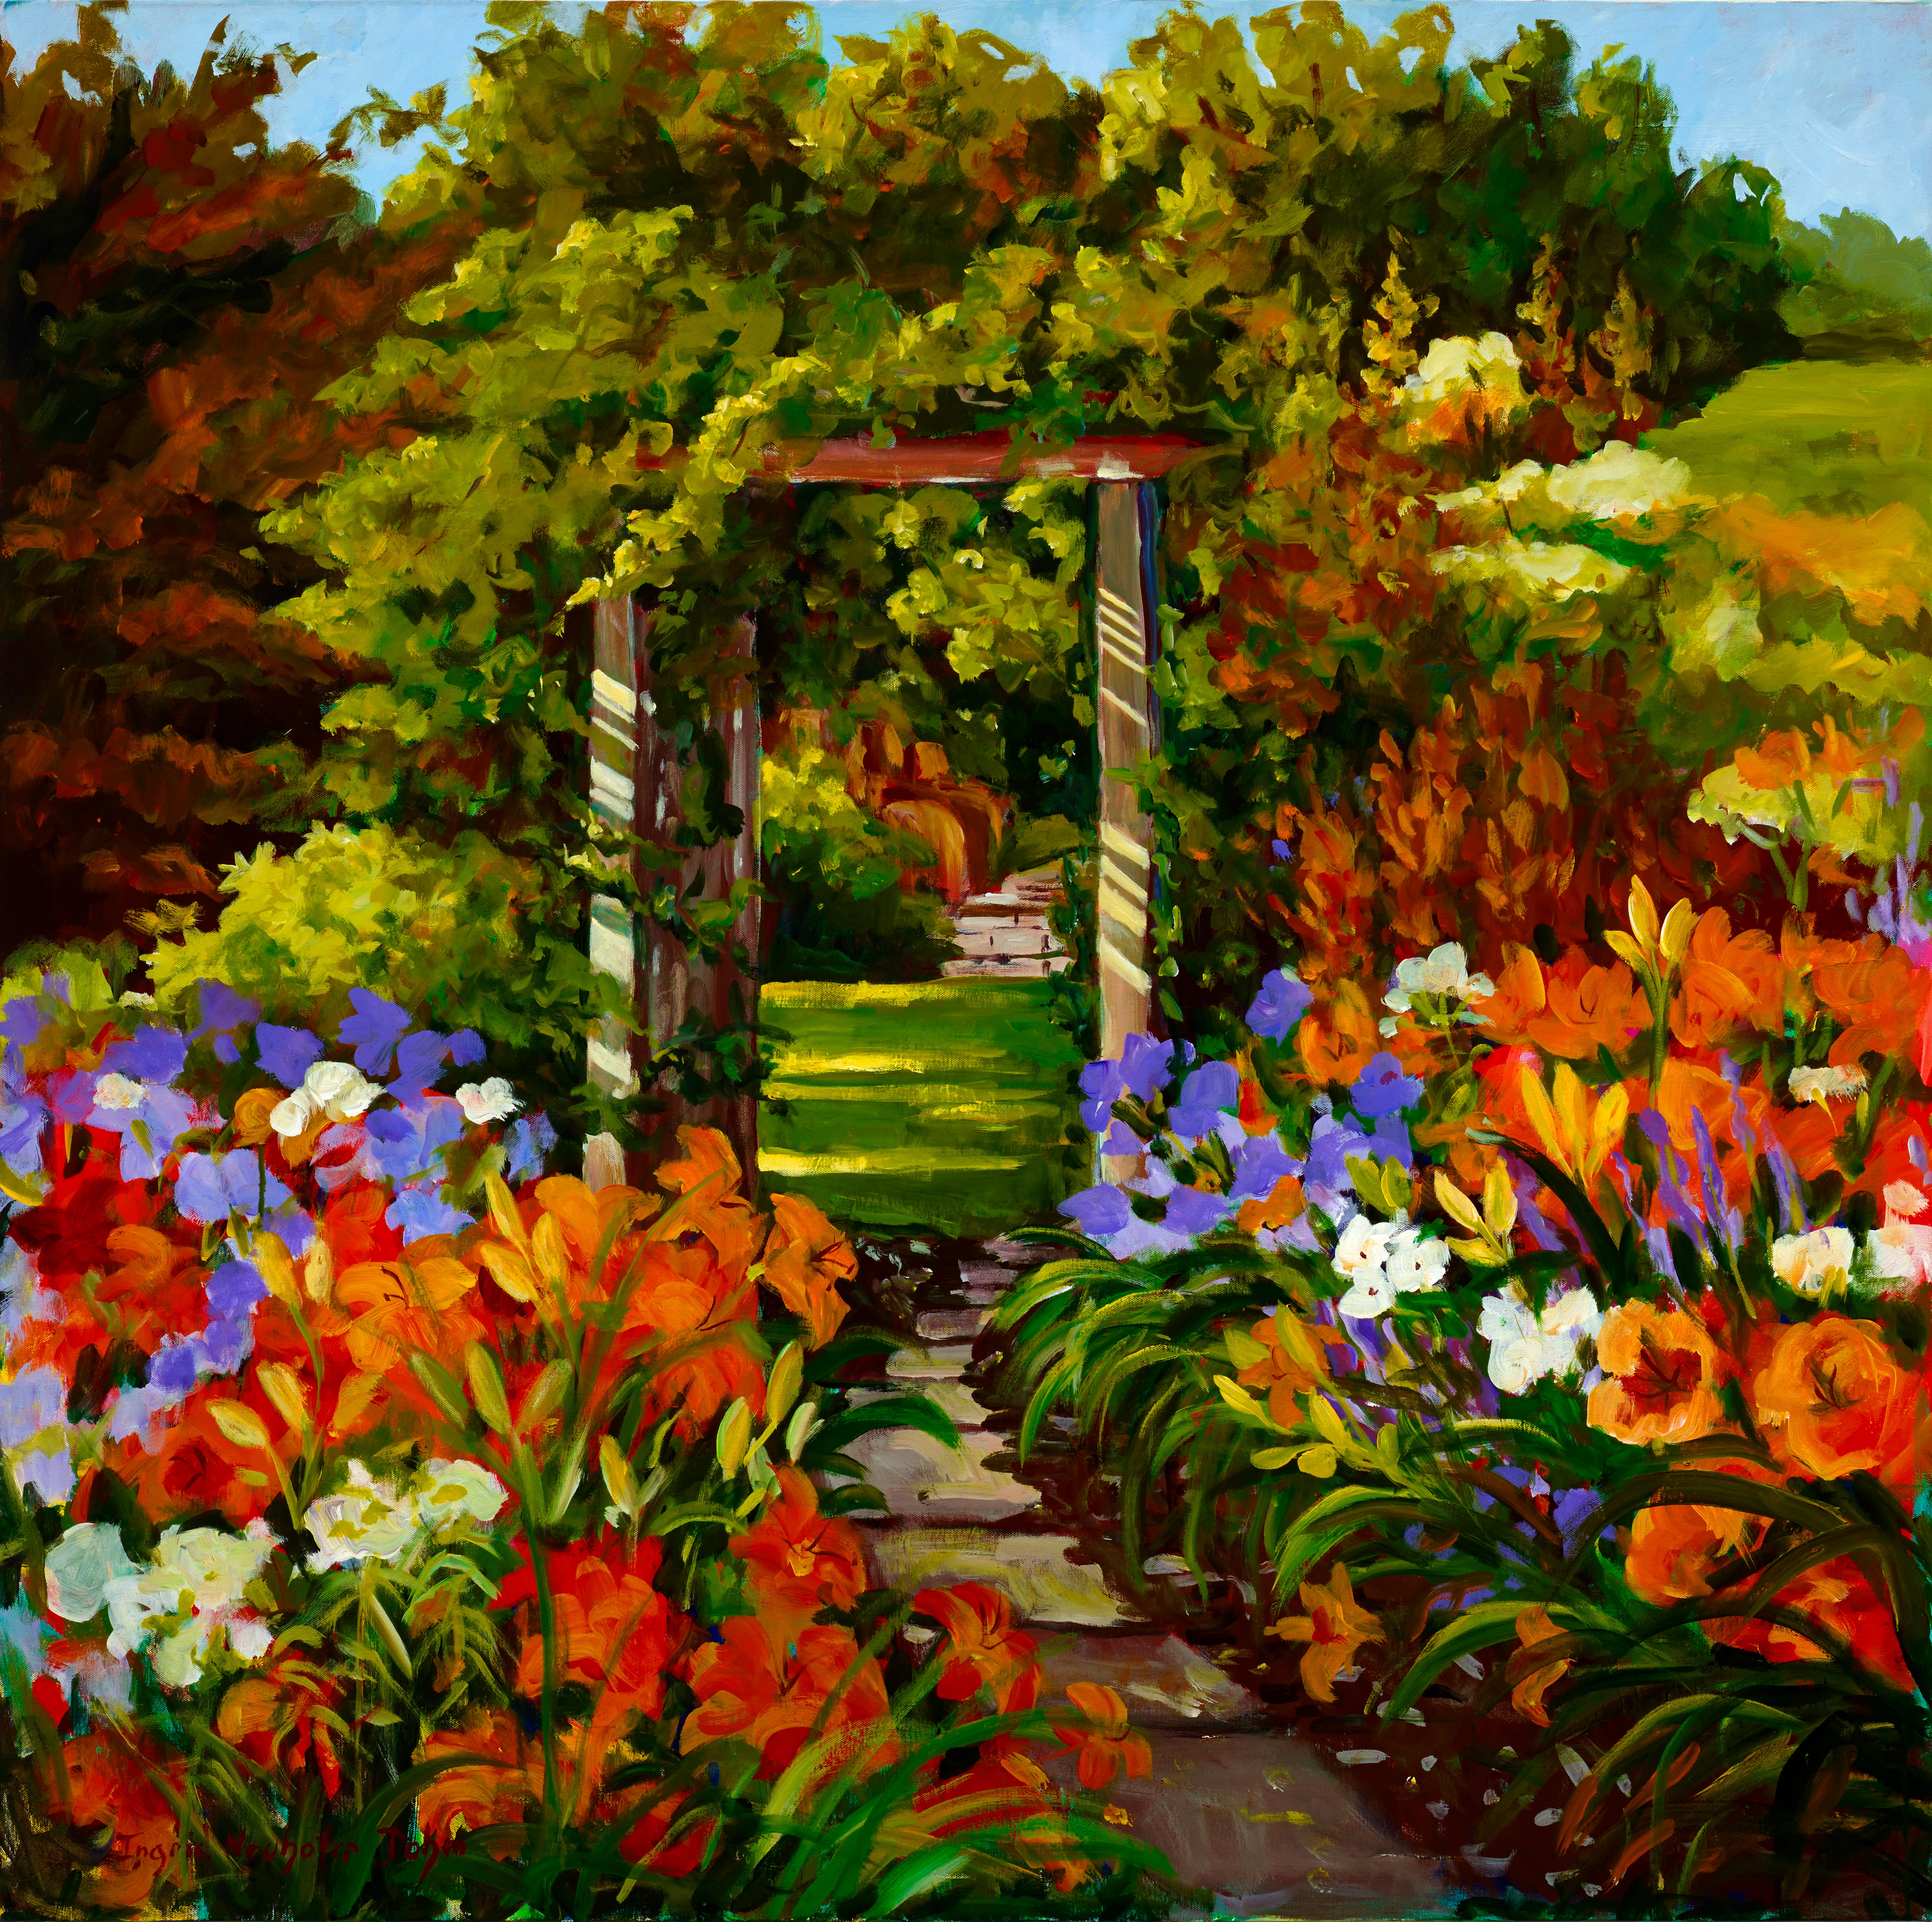 Garden Trellis, Original Acrylic on Canvas Garden Landscape Painting, 2014